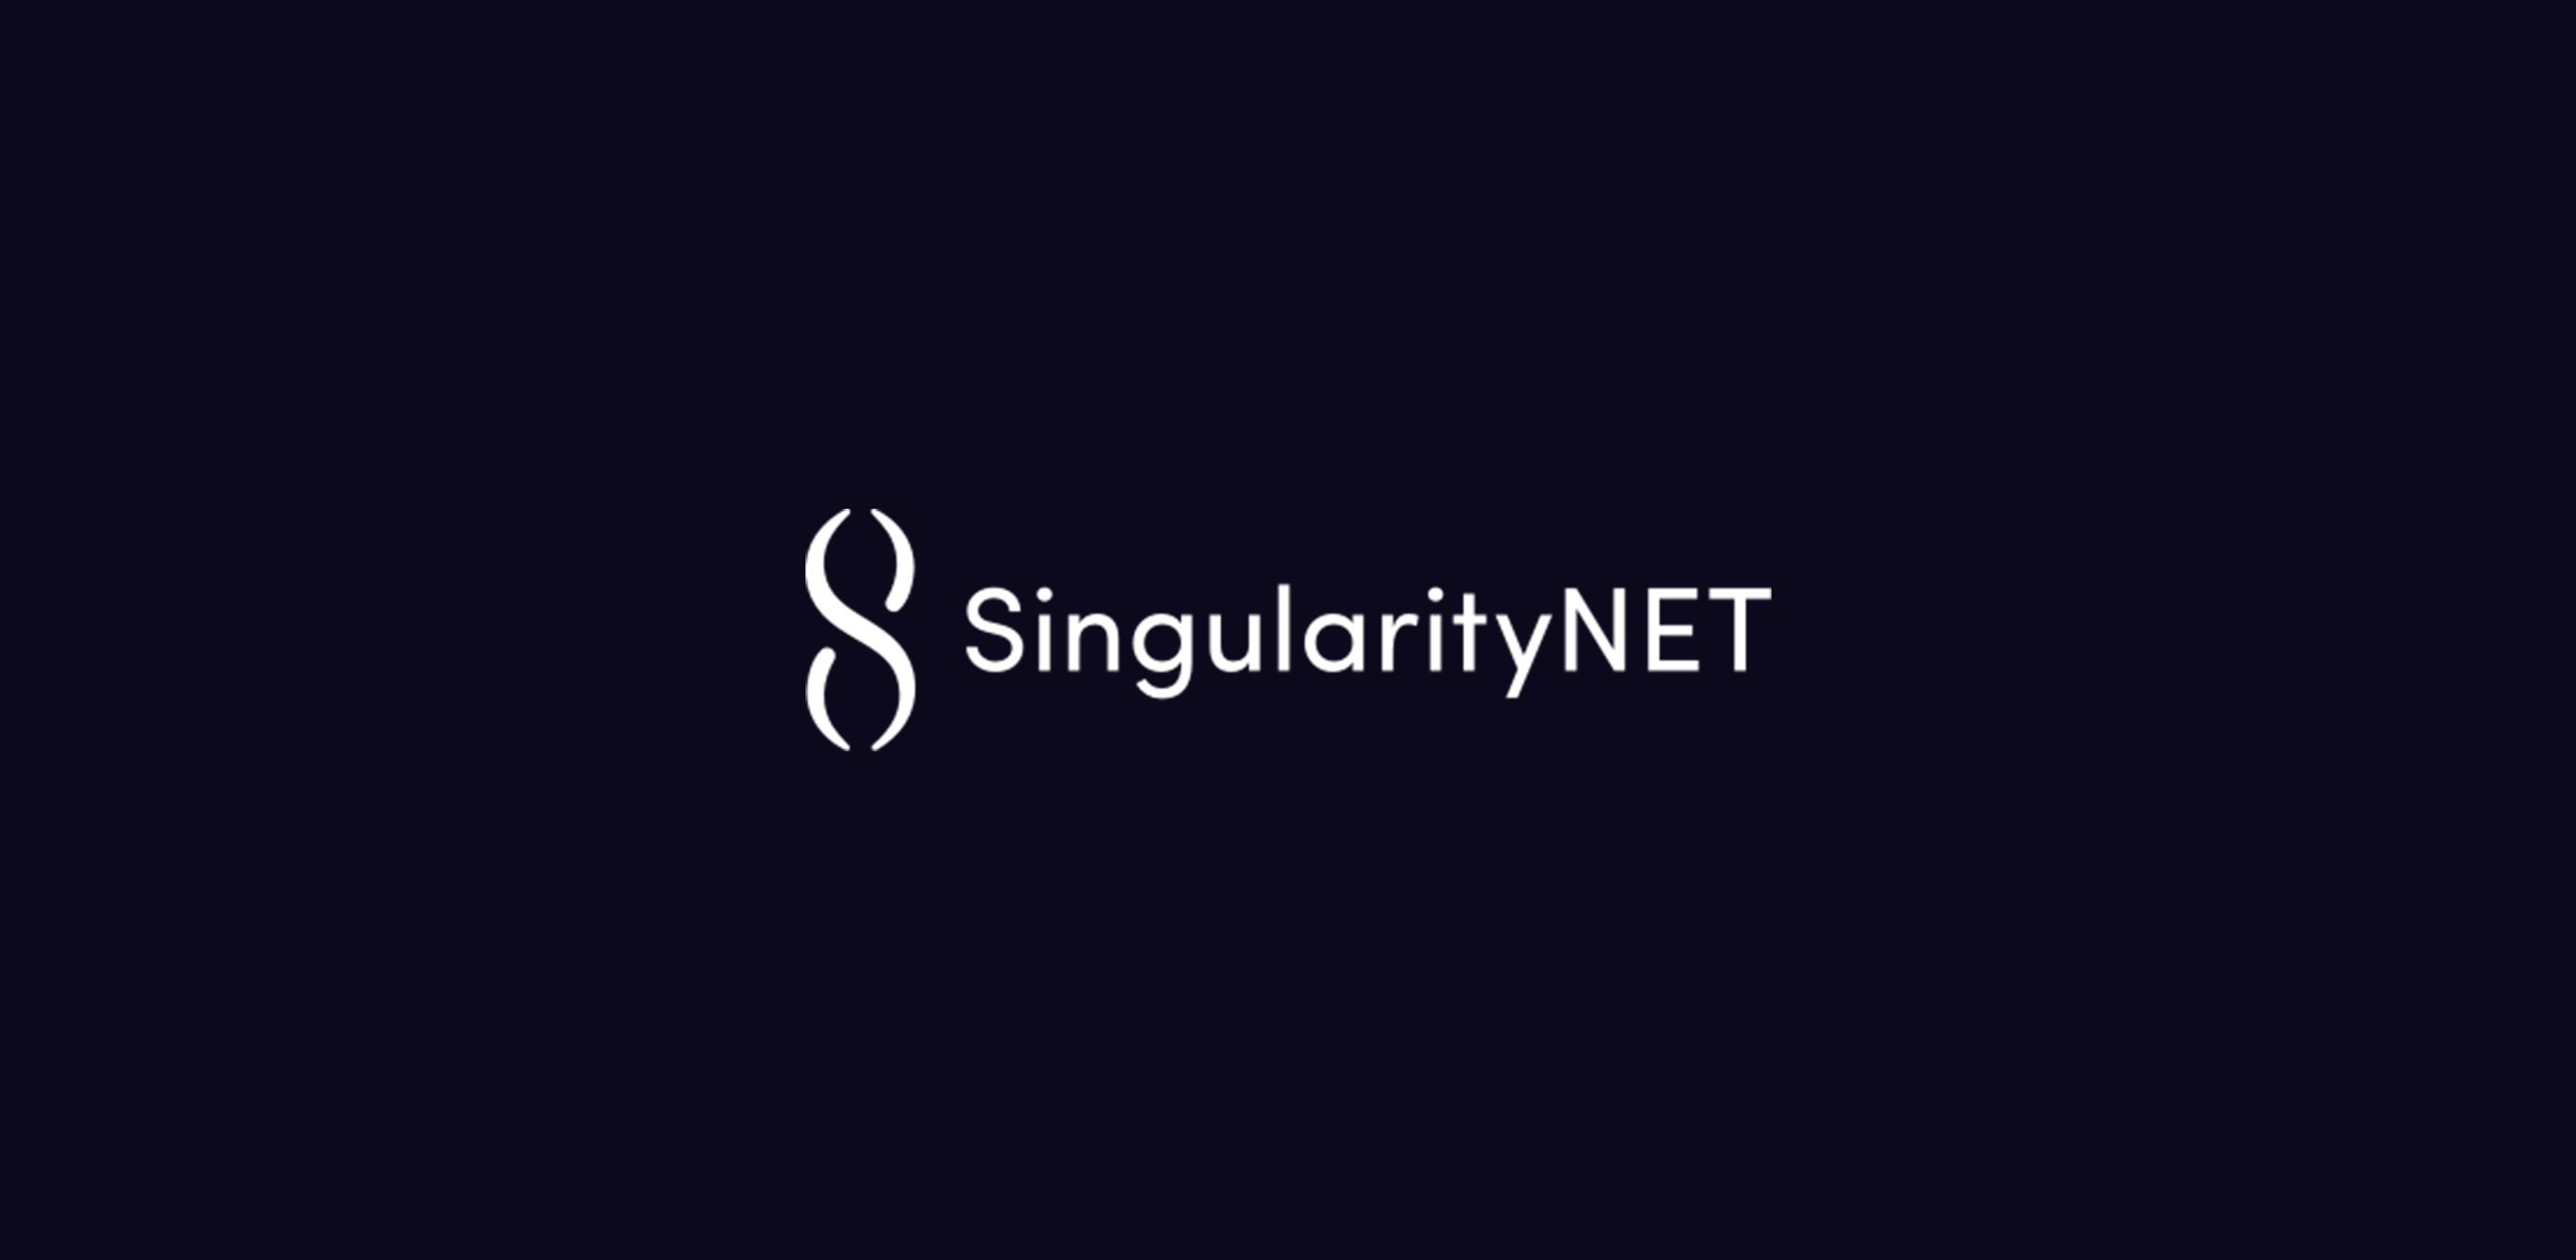 Kaj je SingularityNET? Ultimate AI Network